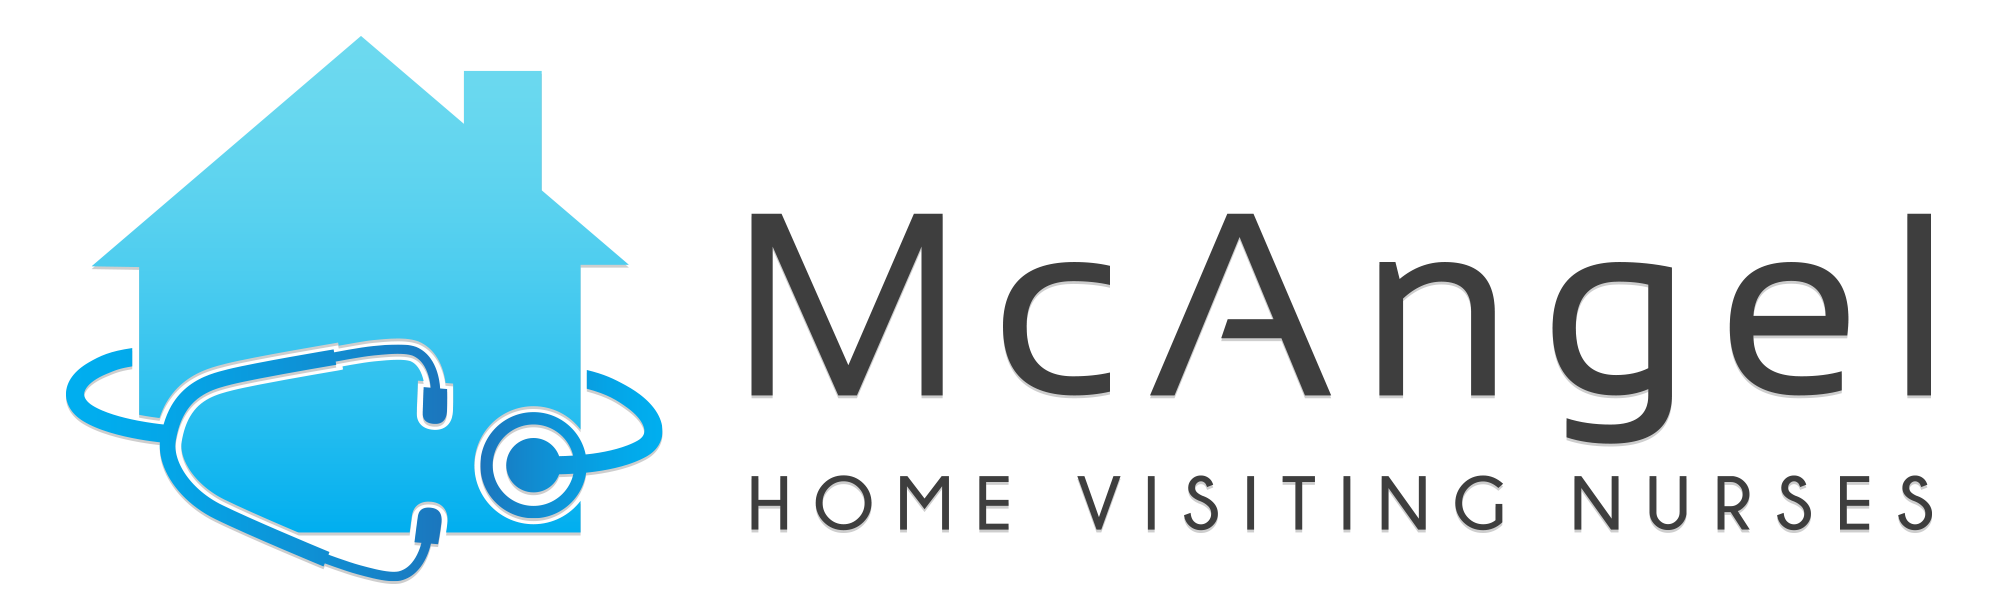 cropped-McAngel-home-visiting-nurses-Logo-pnG.png